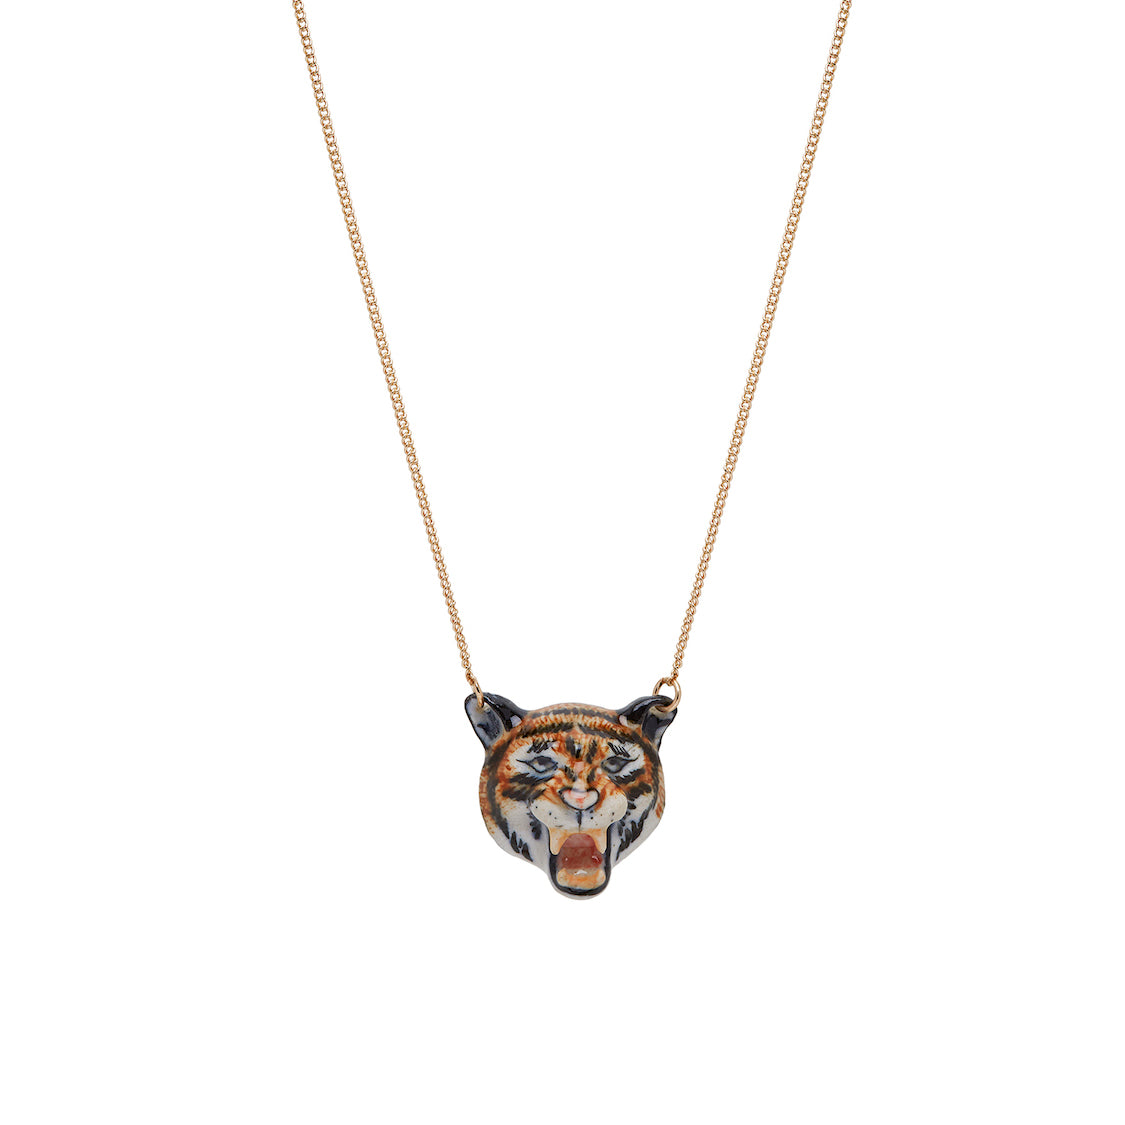 Small Roaring Tiger Head Necklace